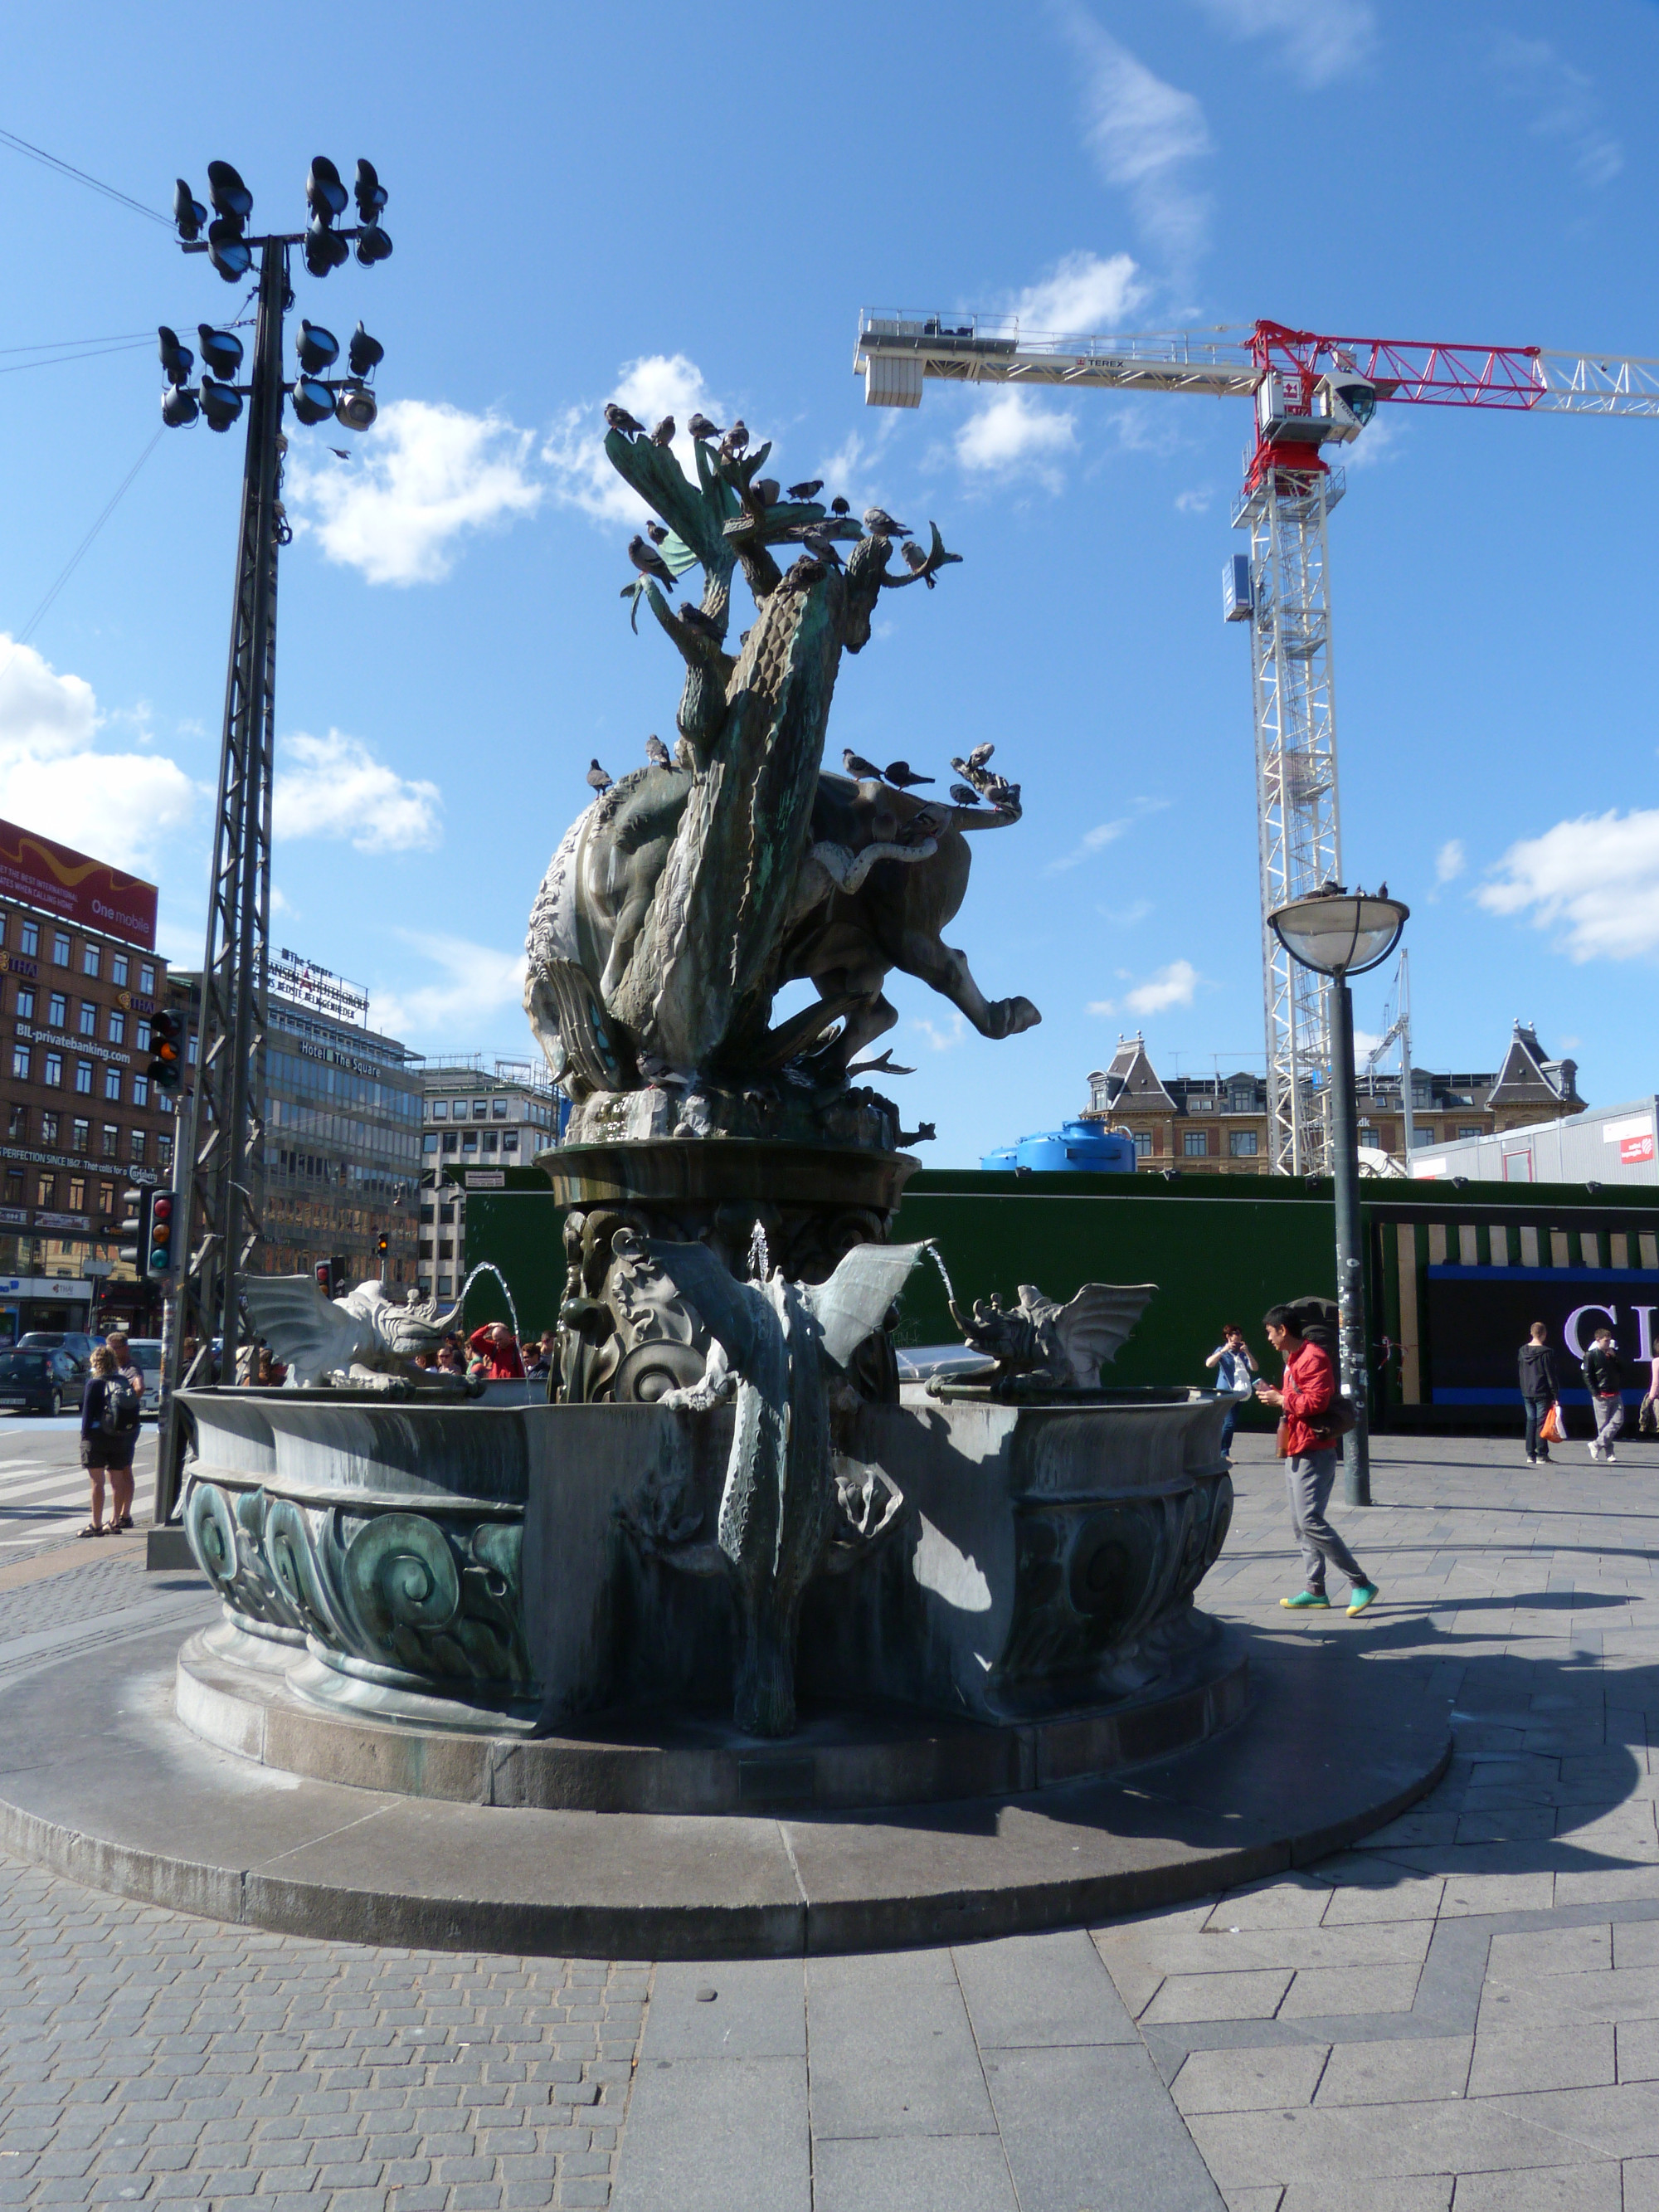 The Dragon Fountain is a fountain located in the City Hall Square in Copenhagen